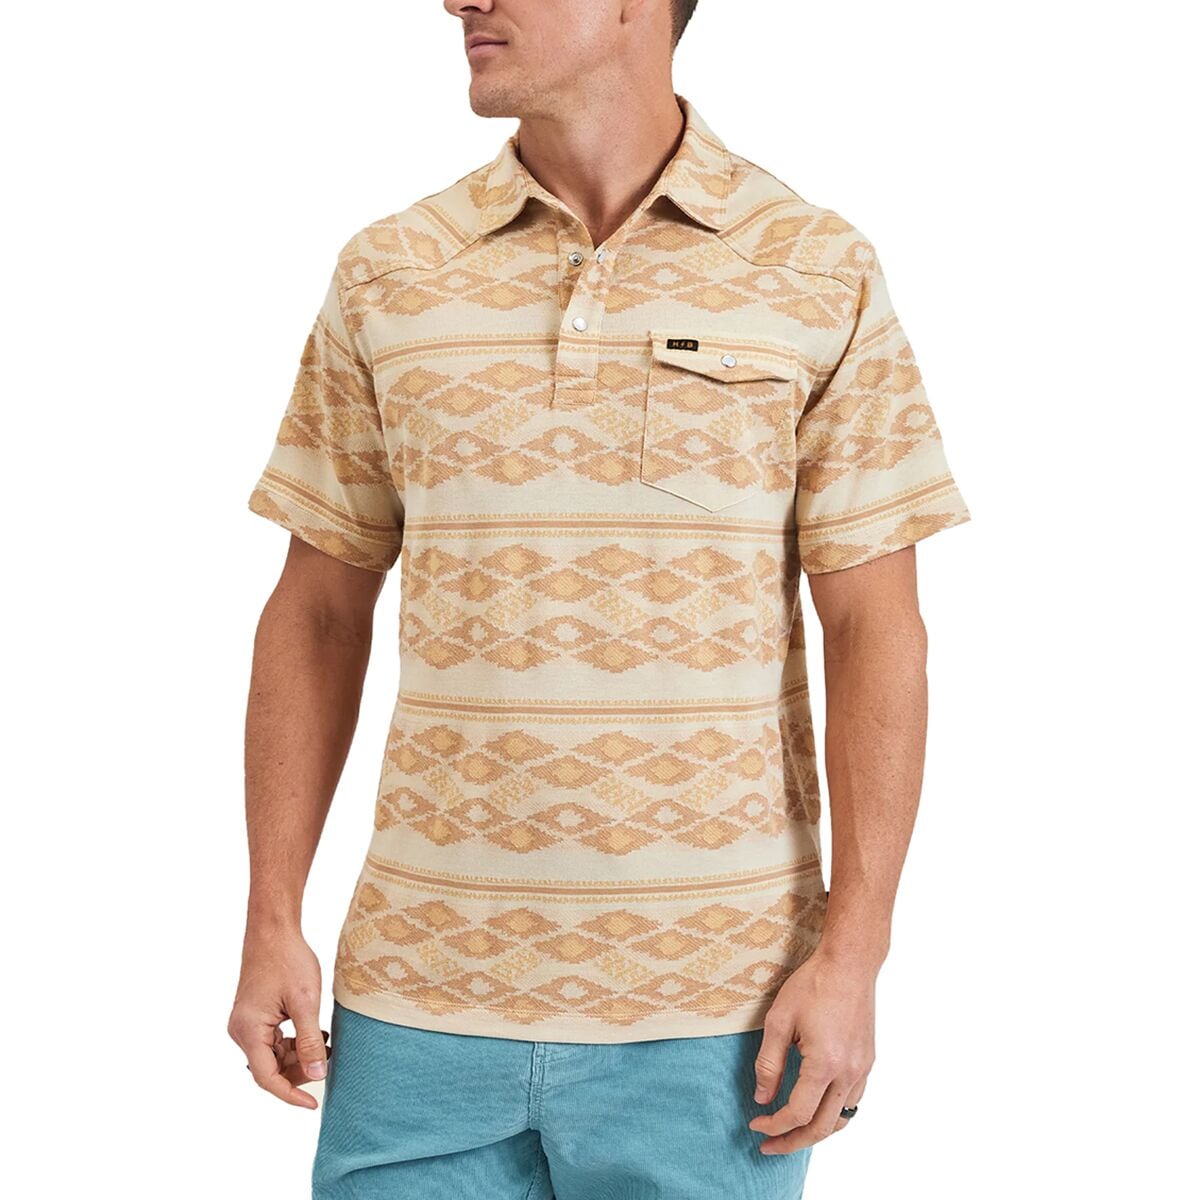 Жаккардовая рубашка-поло ranchero Howler Brothers, цвет taki jacquard/brown rice рубашка поло coolpodarok из хз делаю тз